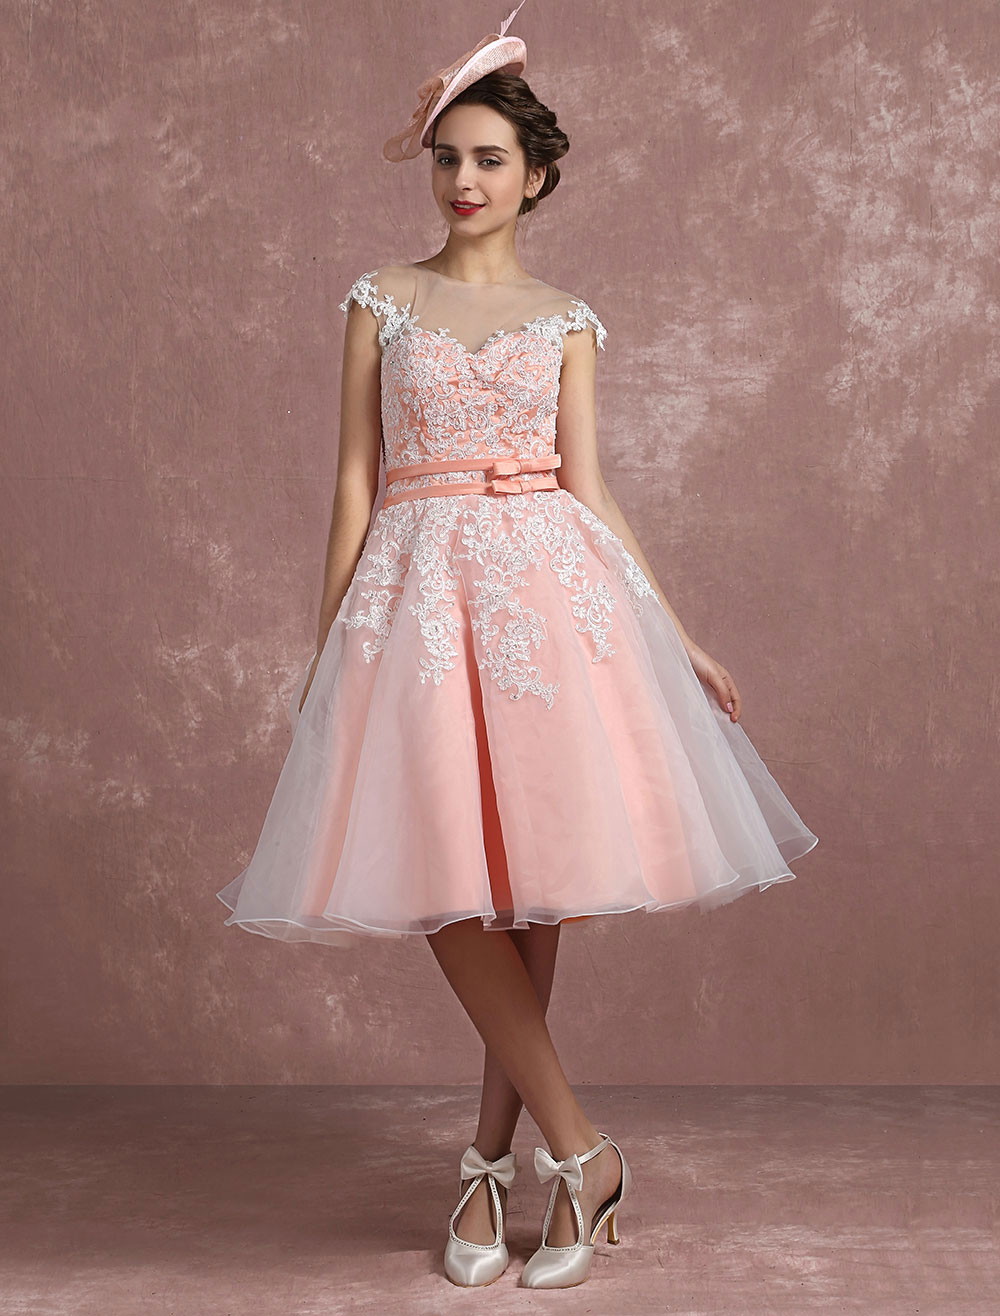 Vintage Wedding Dress Blush Pink Lace Applique Bridal Gown Short Illusion Organza Double Sash Bows Sleeveless Knee Length Bridal Dress Milanoo photo